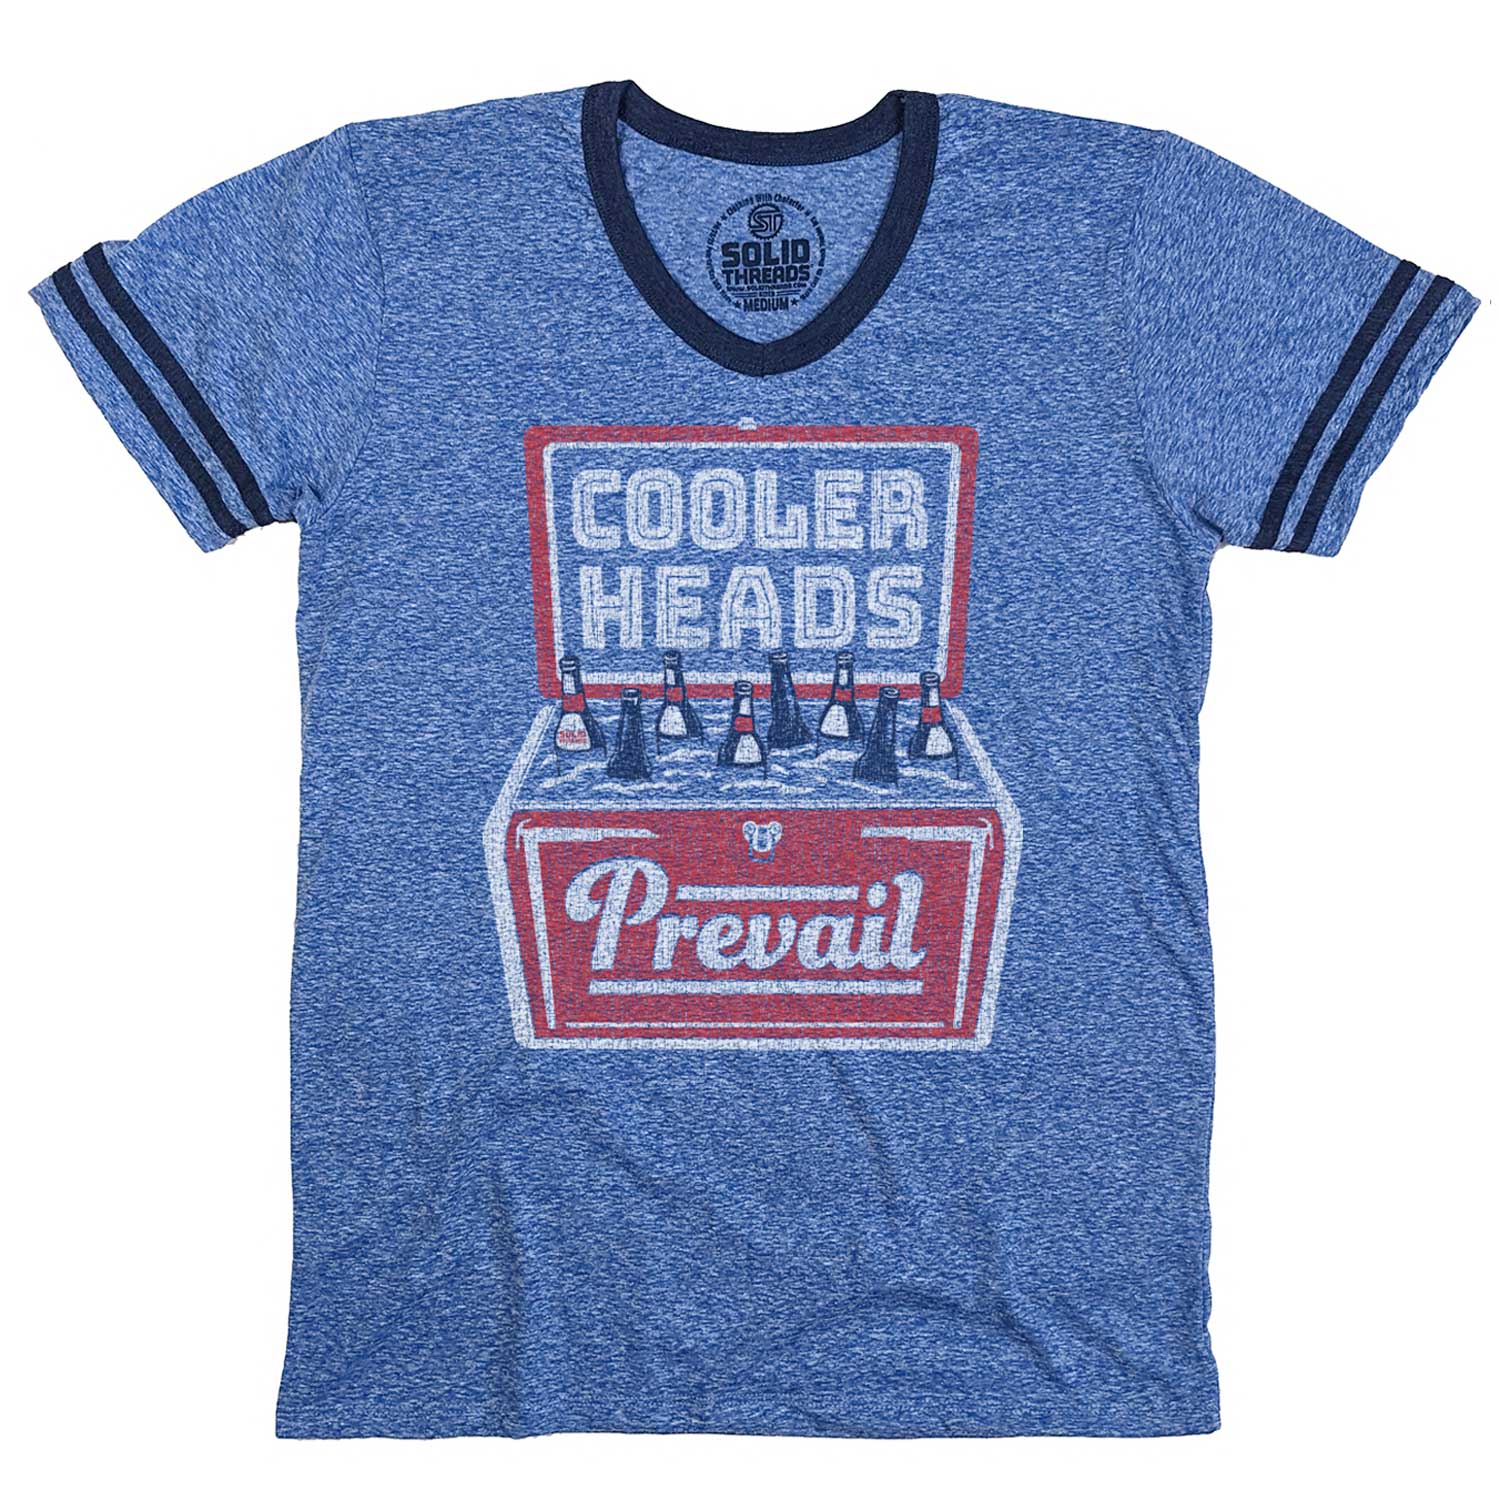 Men's Cooler Heads Vintage Graphic V-Neck Tee | Funny Beer T-shirt | Solid Threads